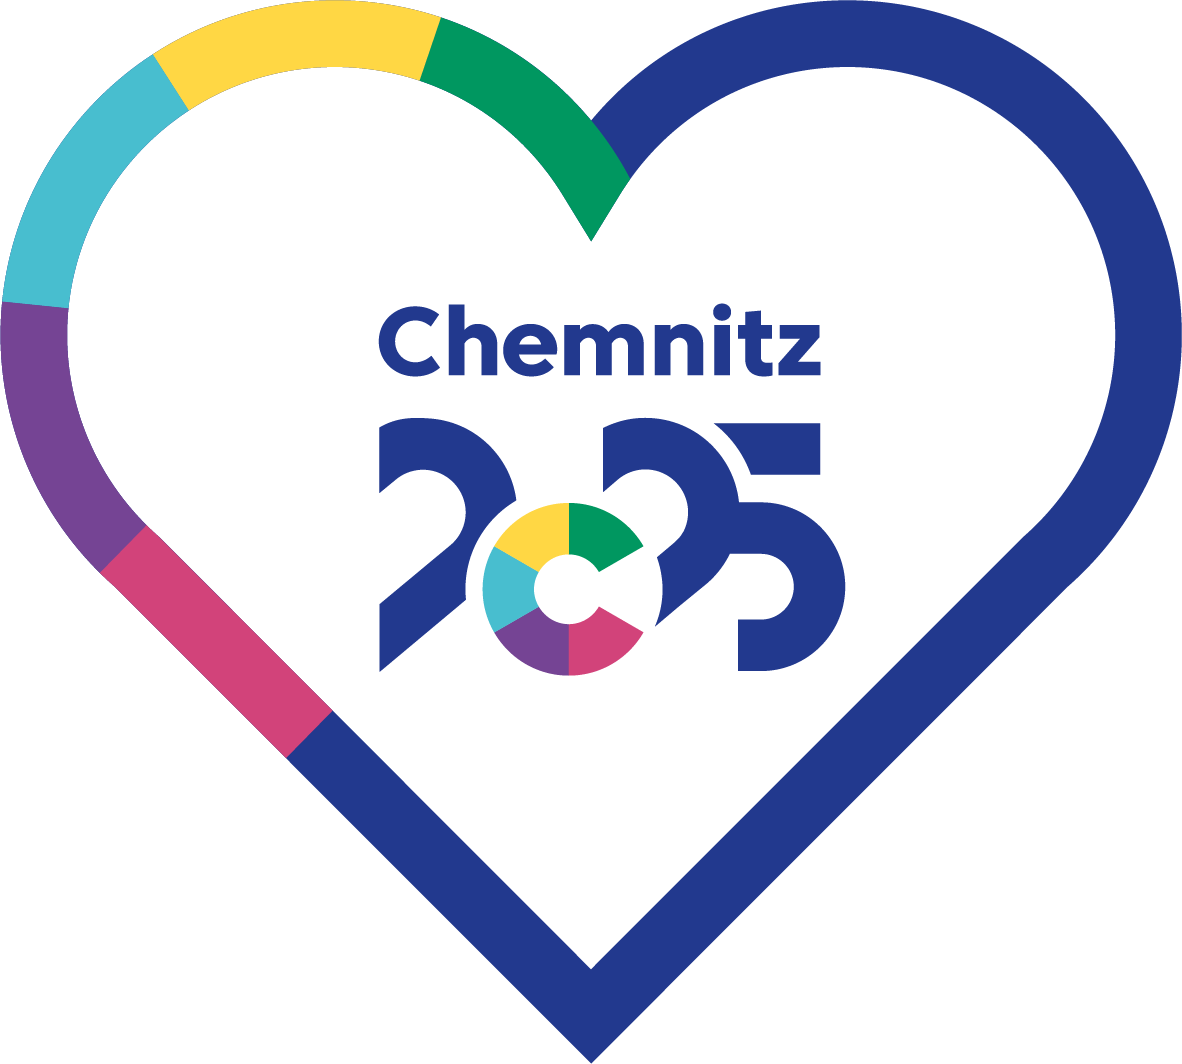 Chemnitz 2025 Kulturhauptstadt